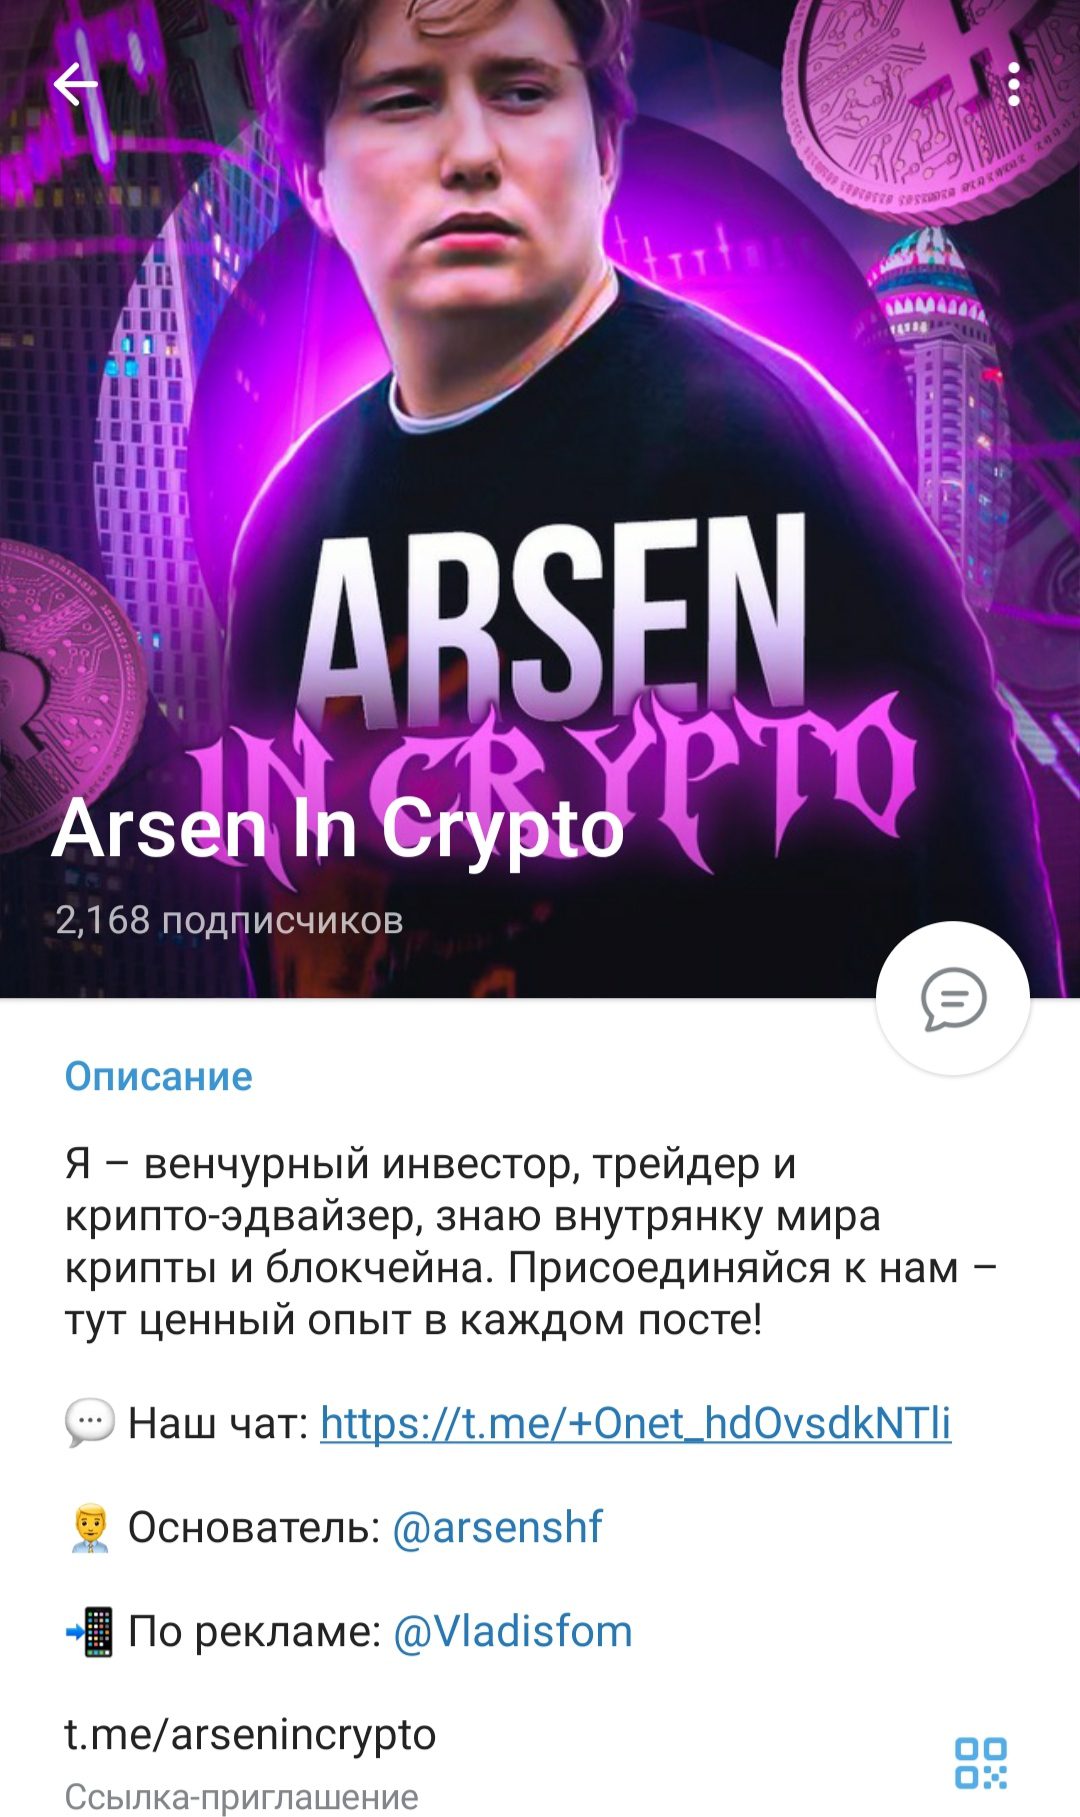 Arsen In Crypto телеграмм